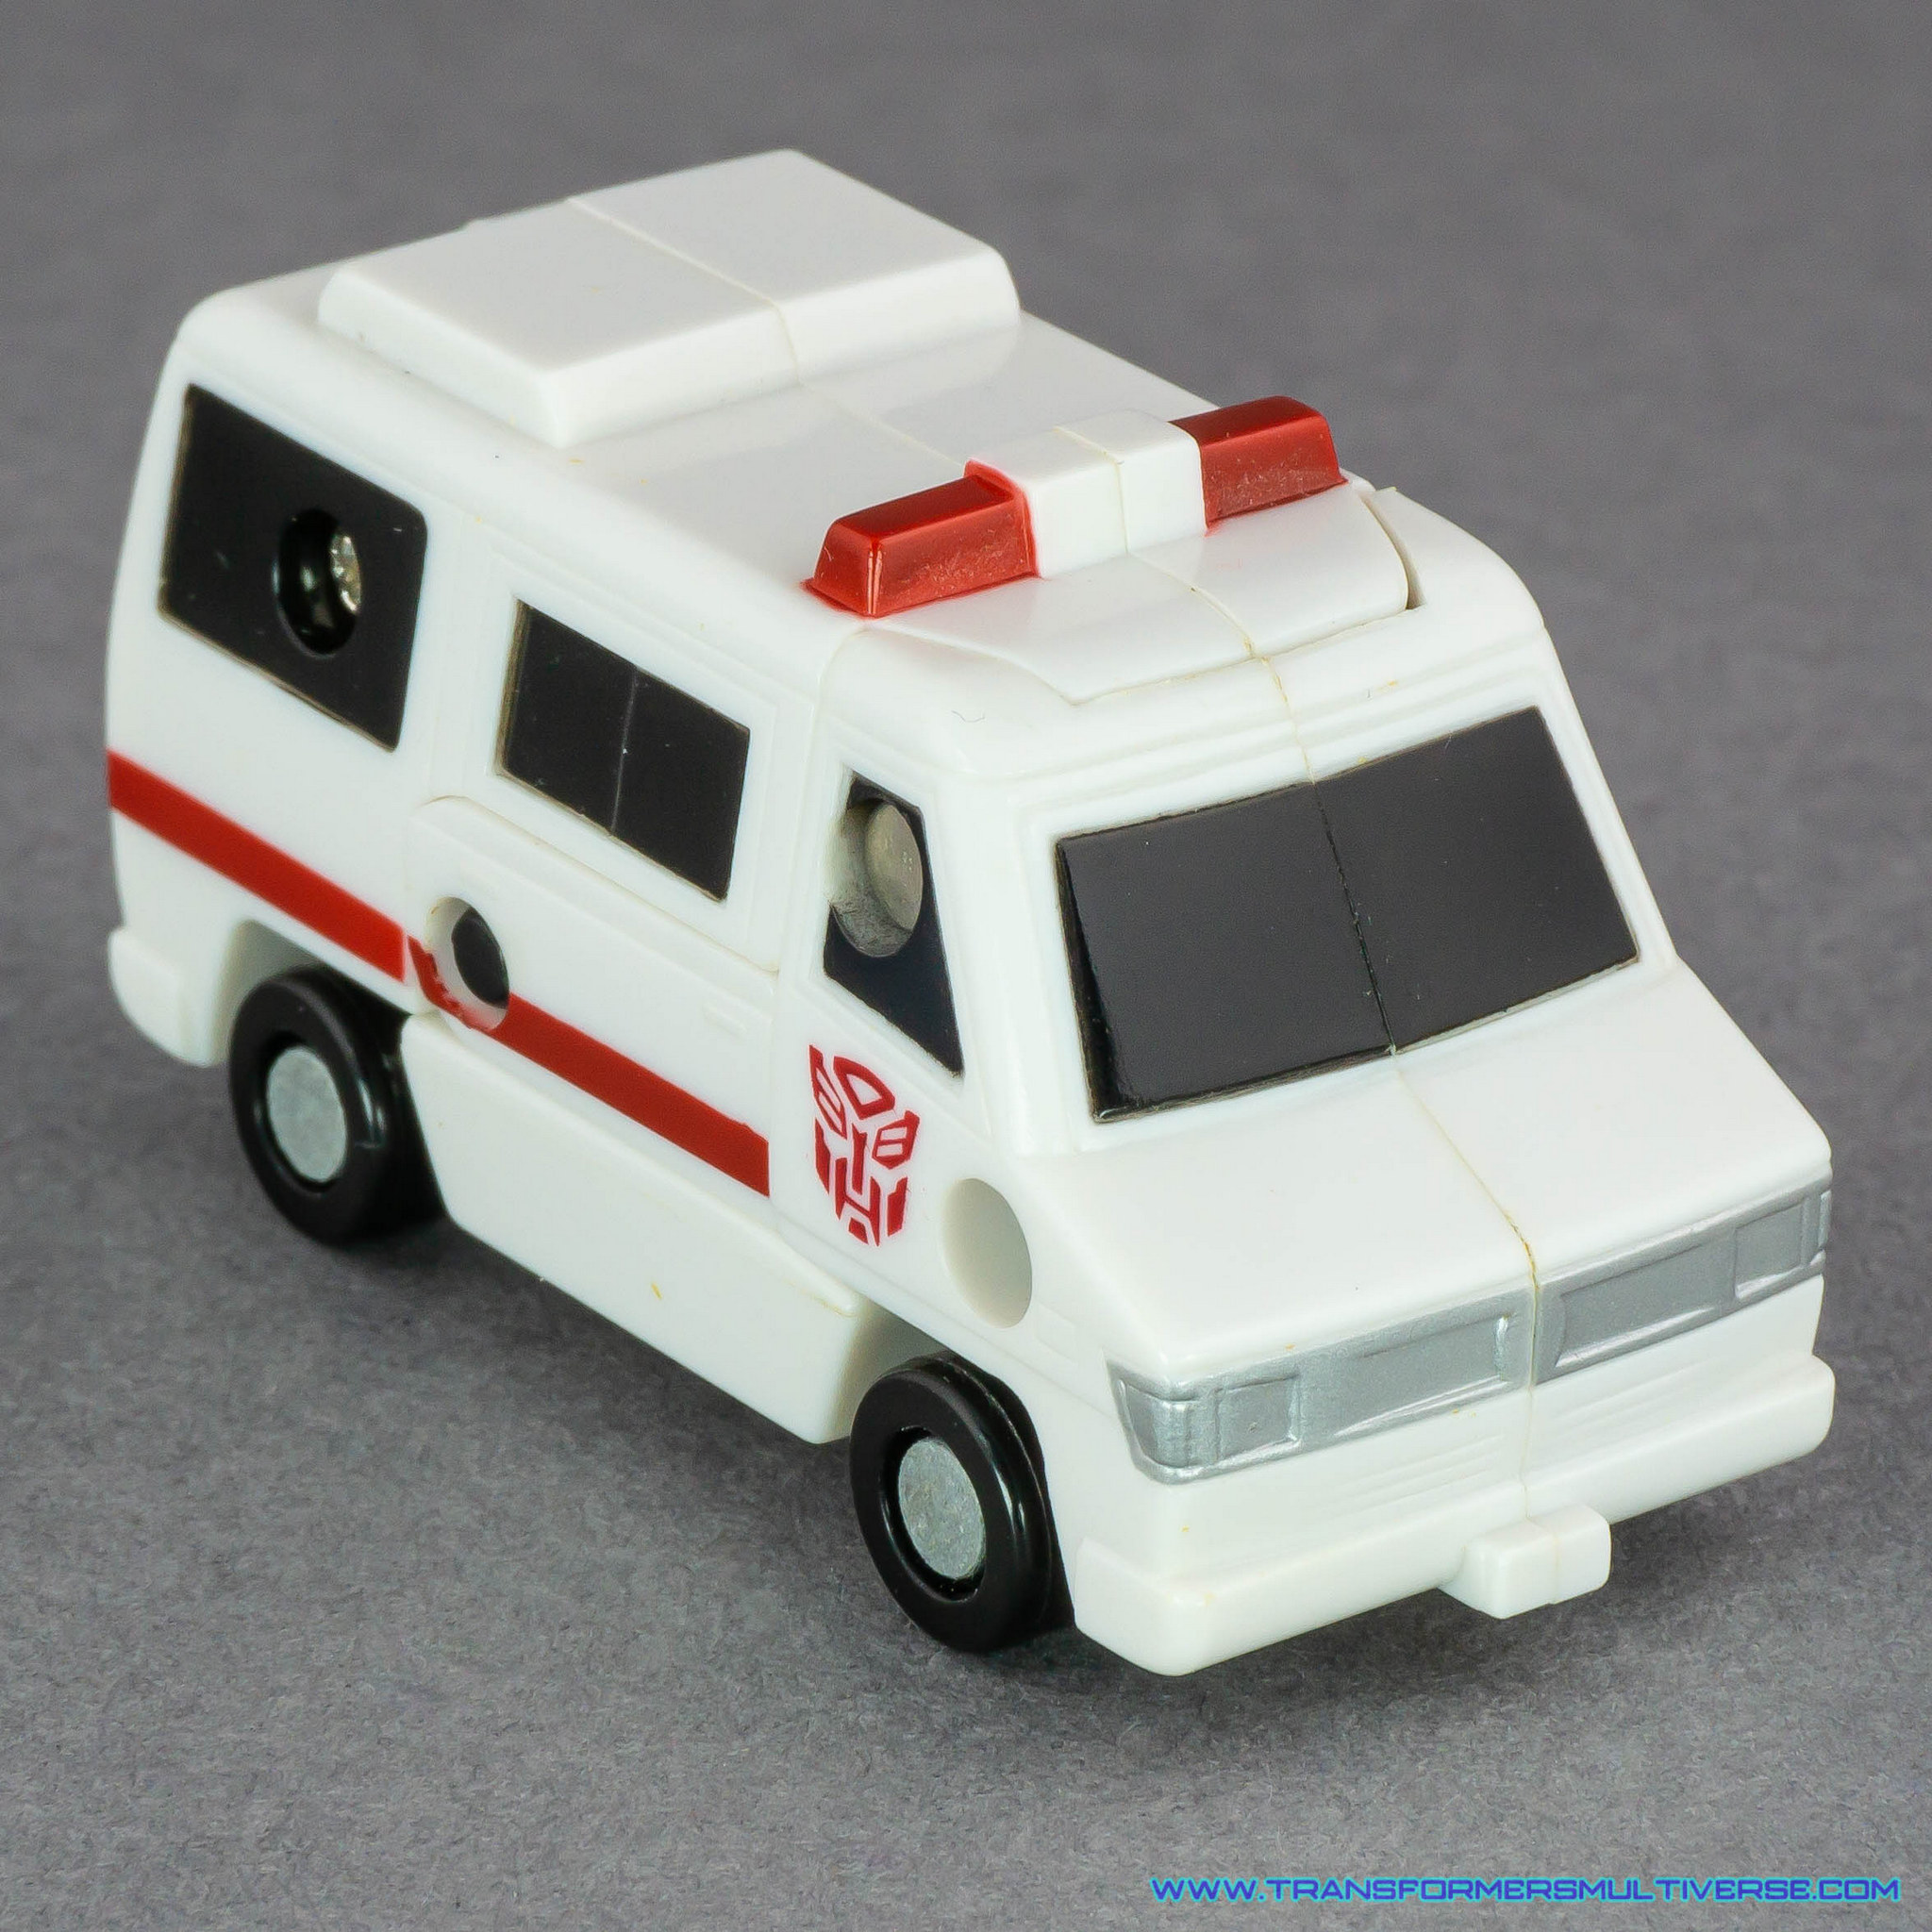 Transformers Operation Combiner Sireen Ambulance mode